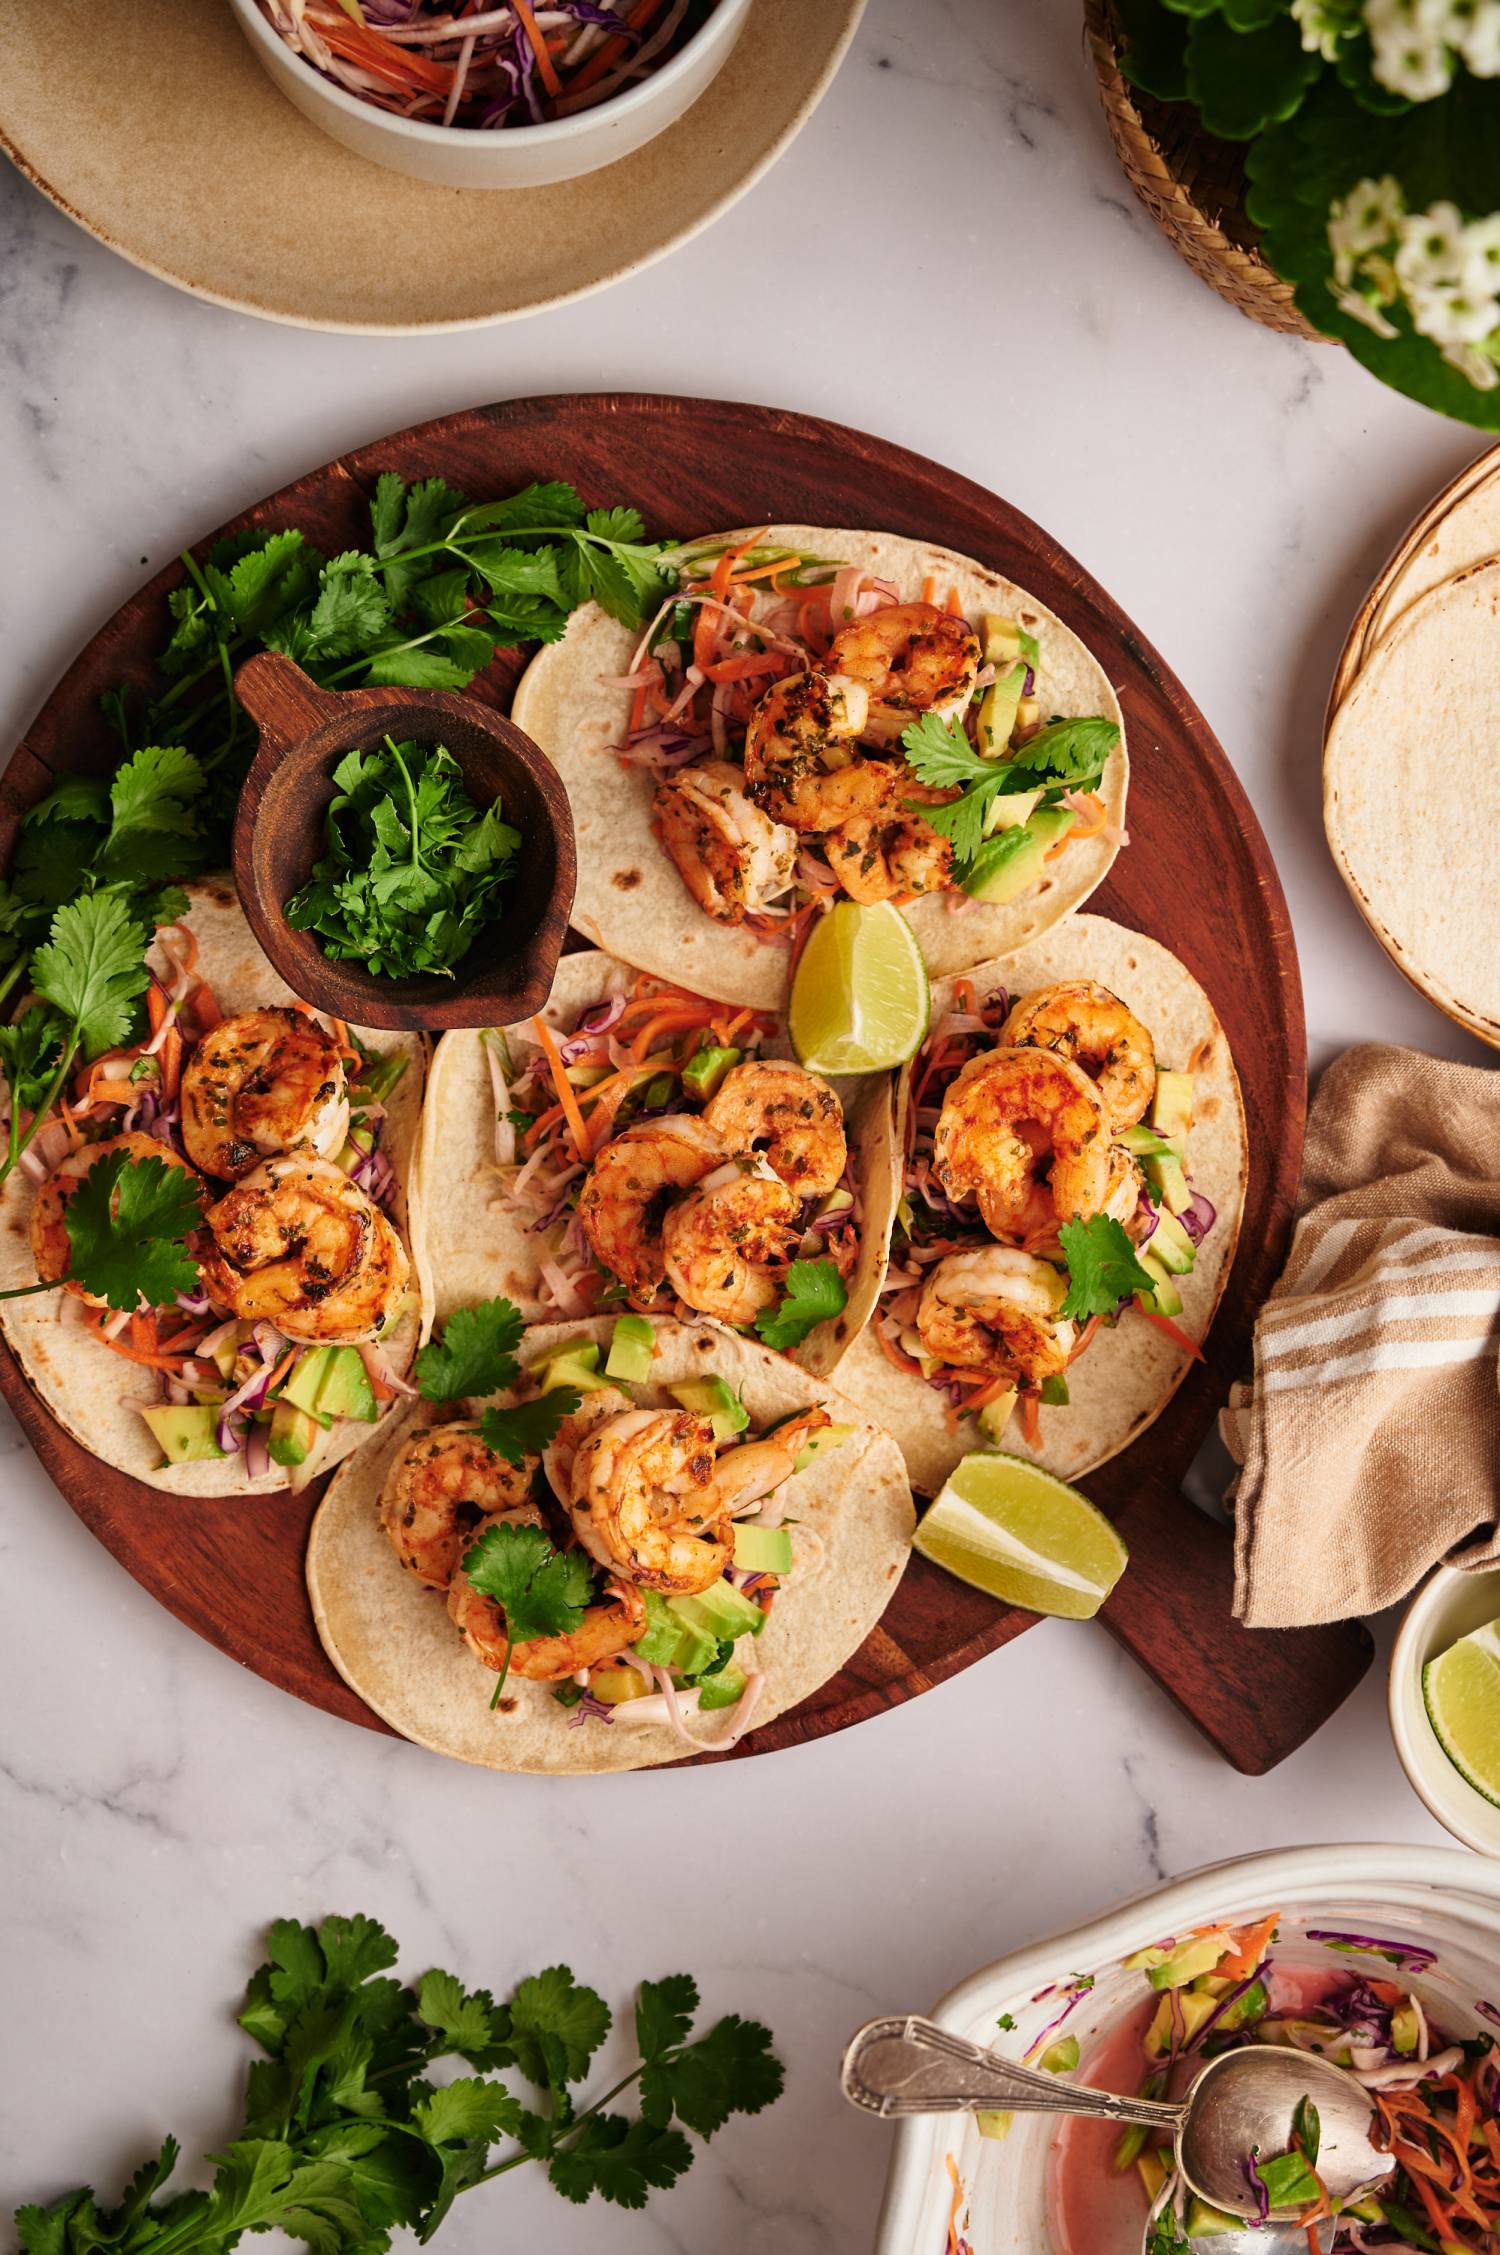 Shrimp and slaw tacos with cabbage, seasoned shrimp, avocado, and cilantro served on warm tortillas.